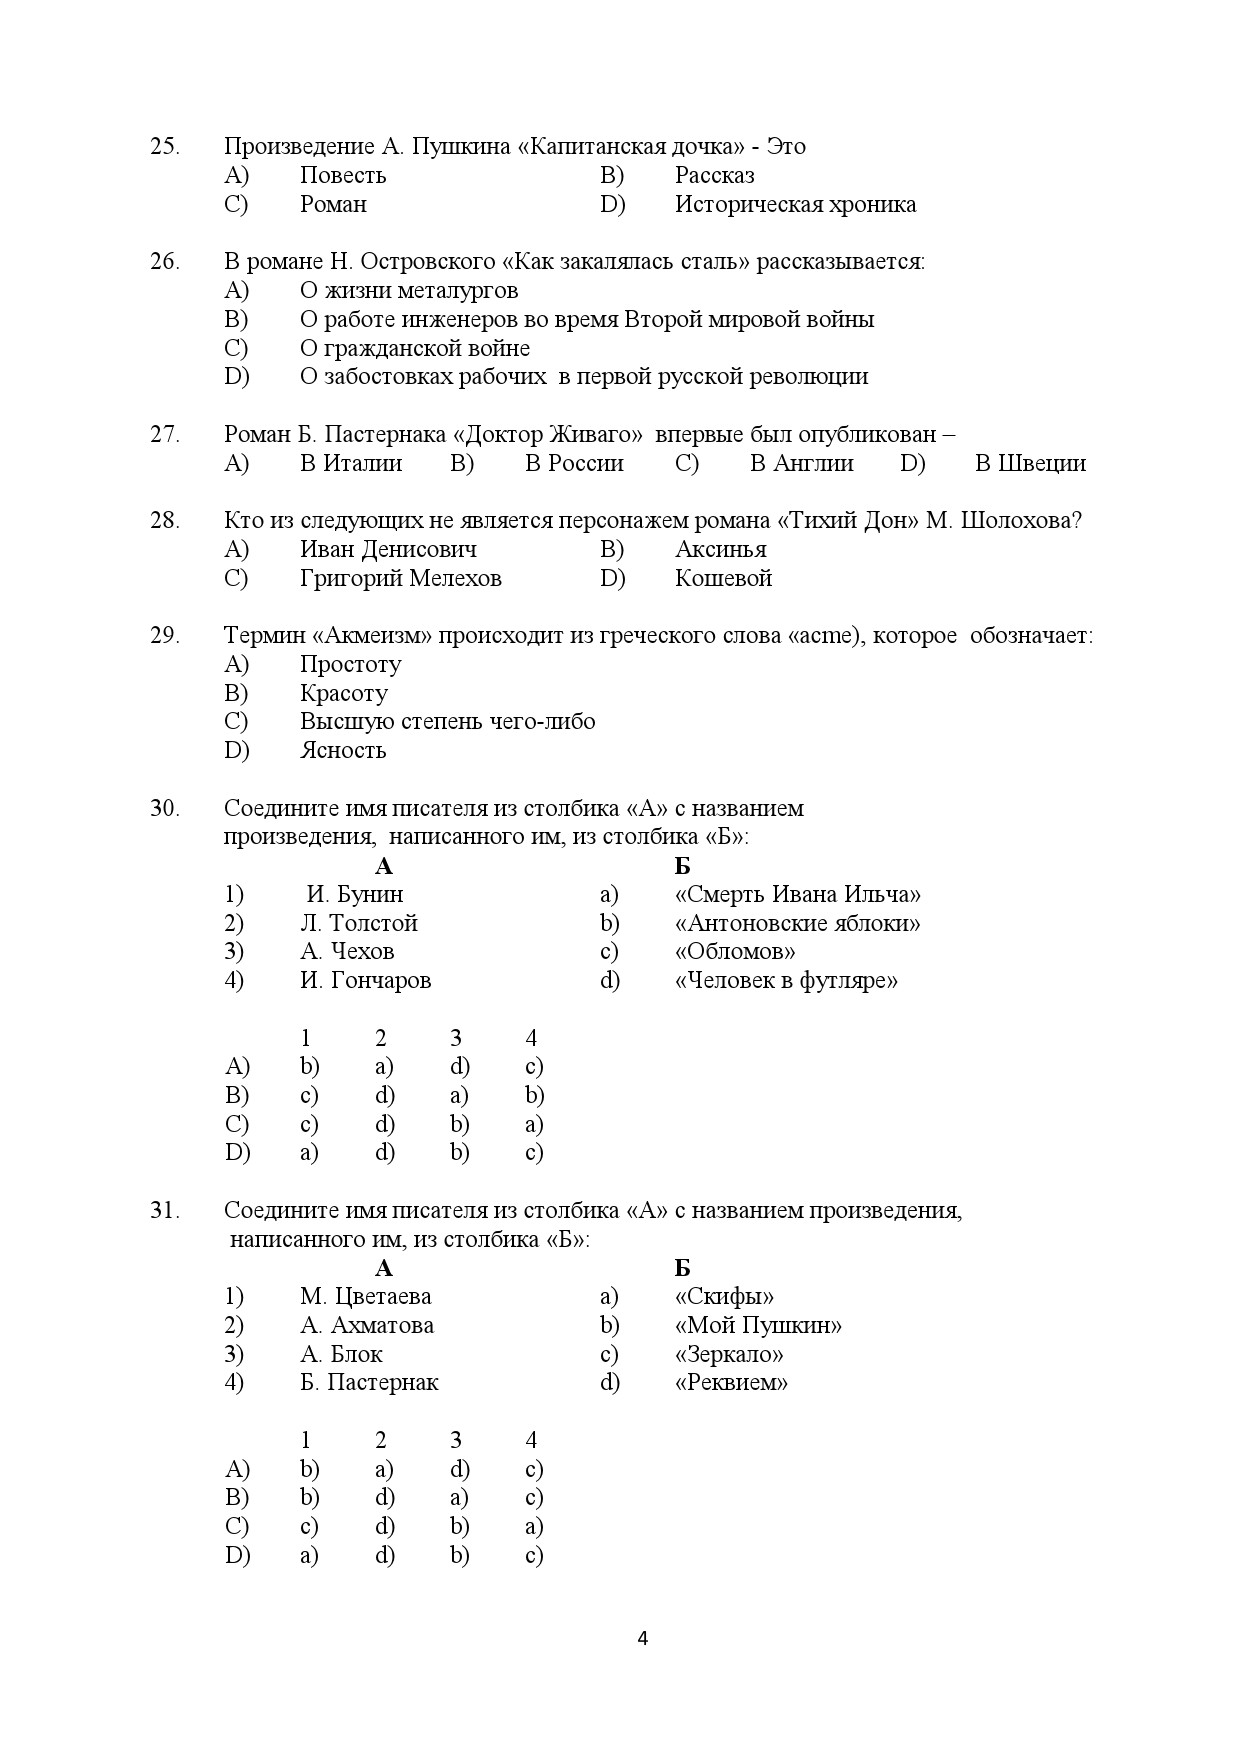 Kerala SET Russian Exam Question Paper February 2018 4